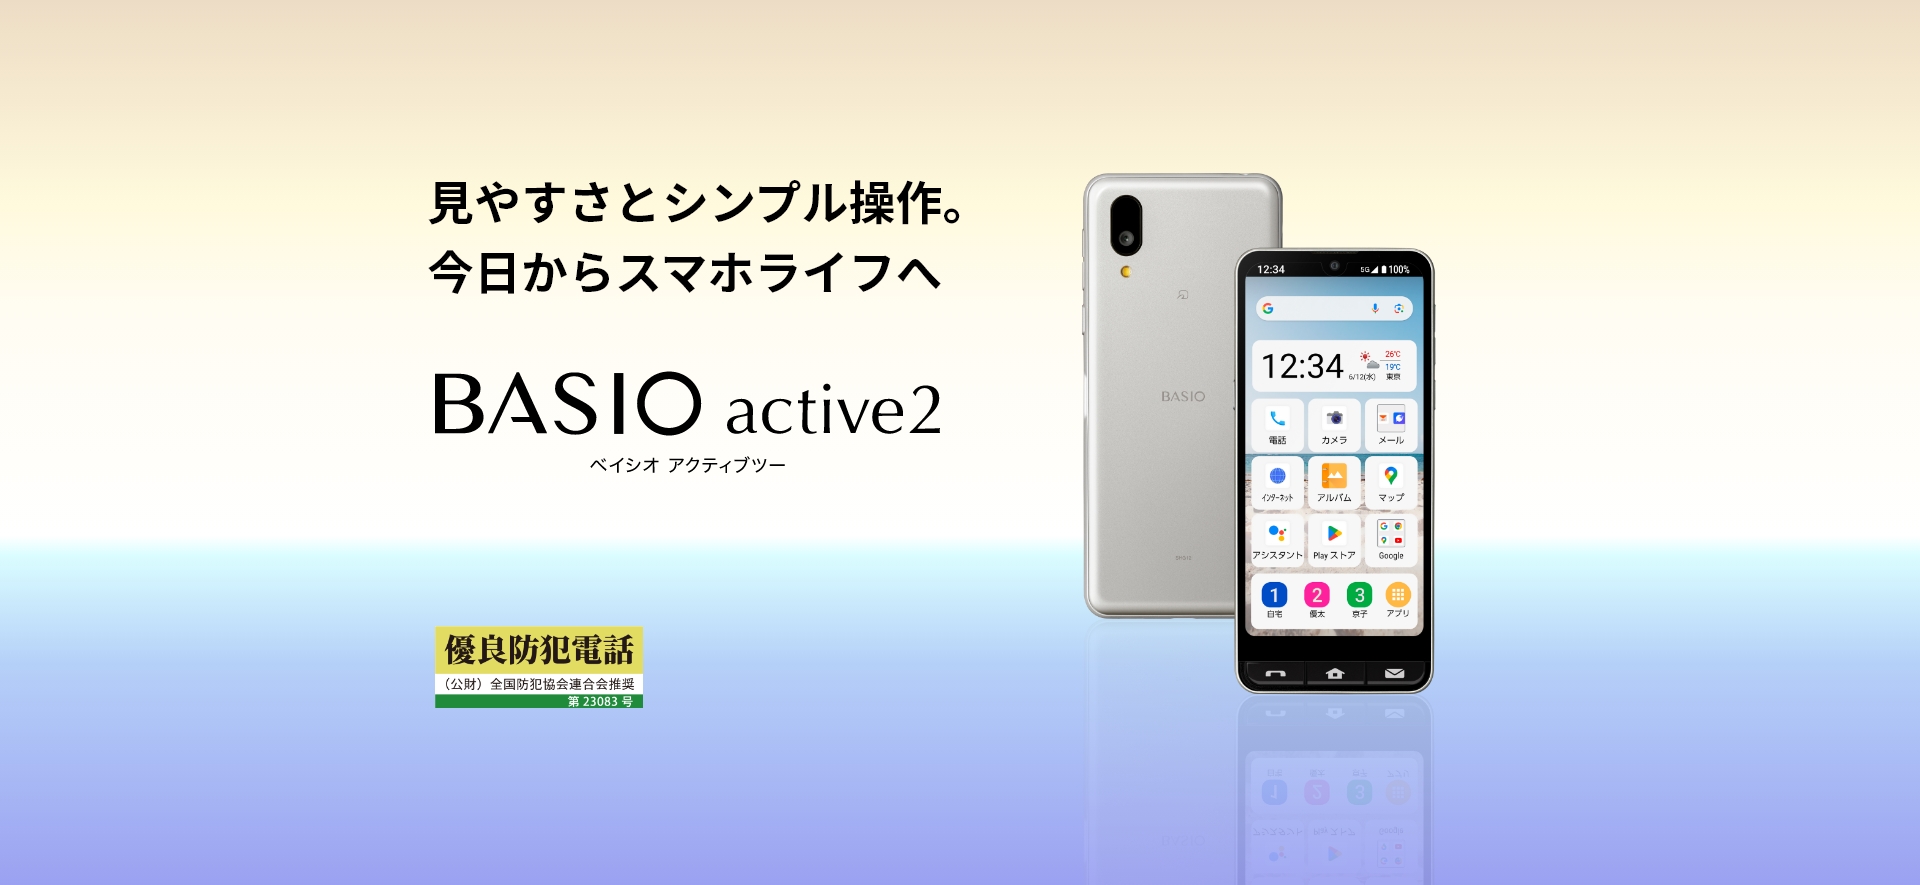 BASIO active2イメージ画像